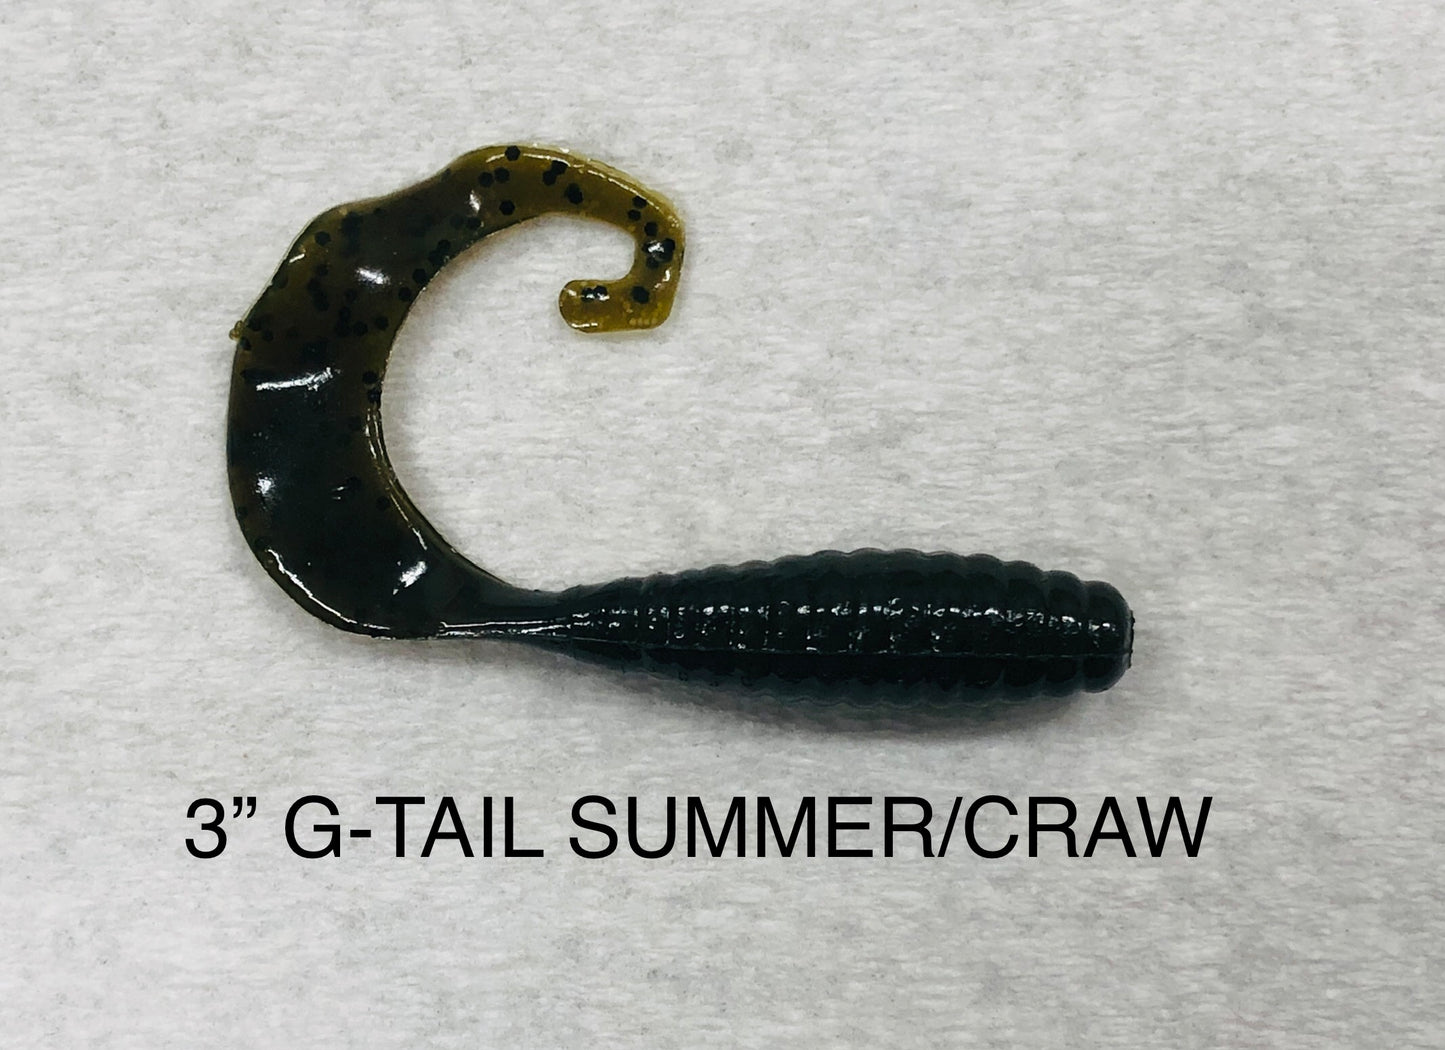 gitzit-g-tail-grub-summer-craw-3in-19219